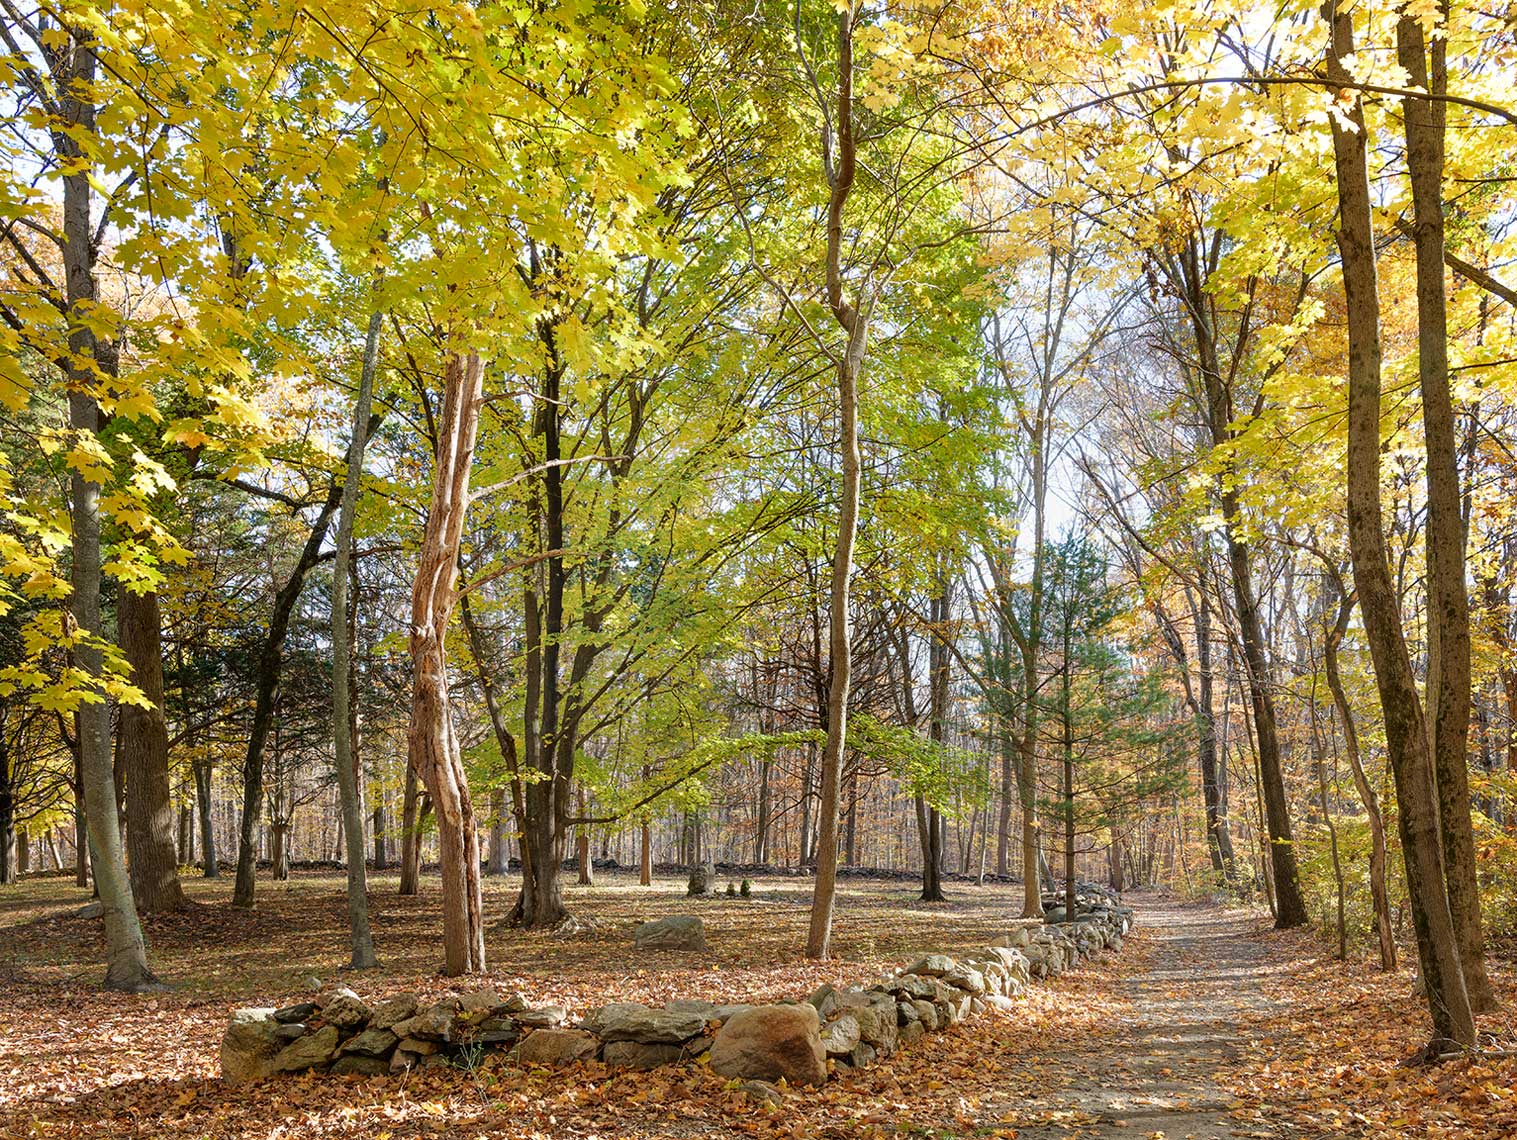 Pathway-Through-the-Fall-Foliage